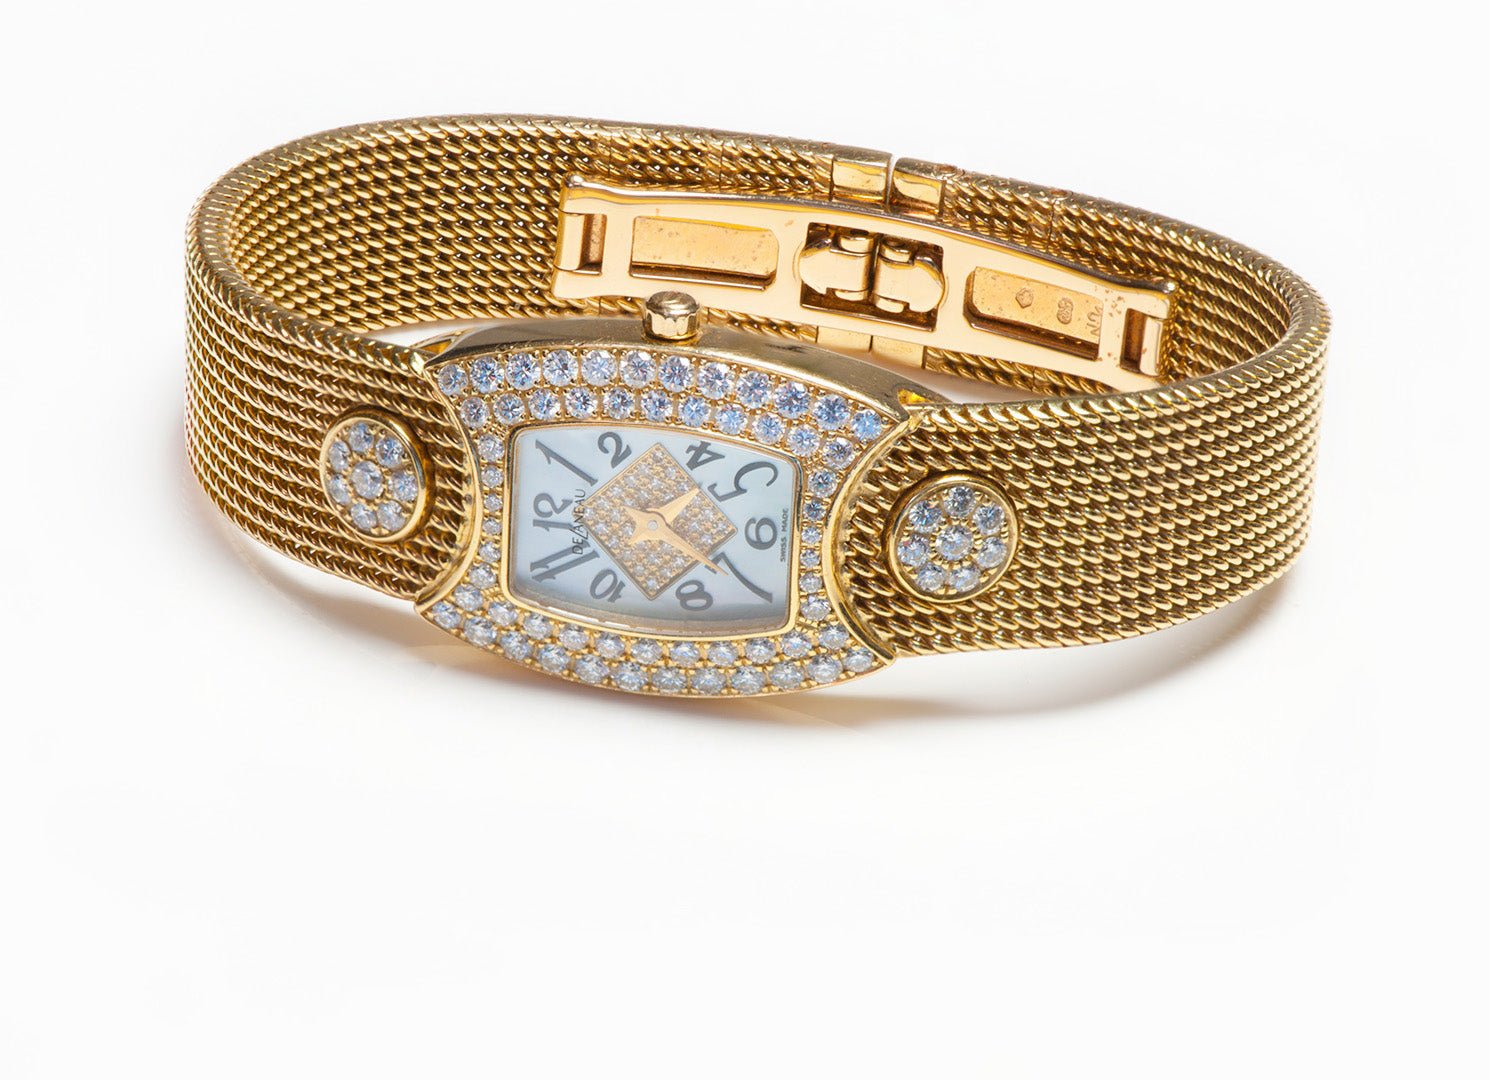 DeLaneau First Lady 18K Gold Diamond Ladies Watch